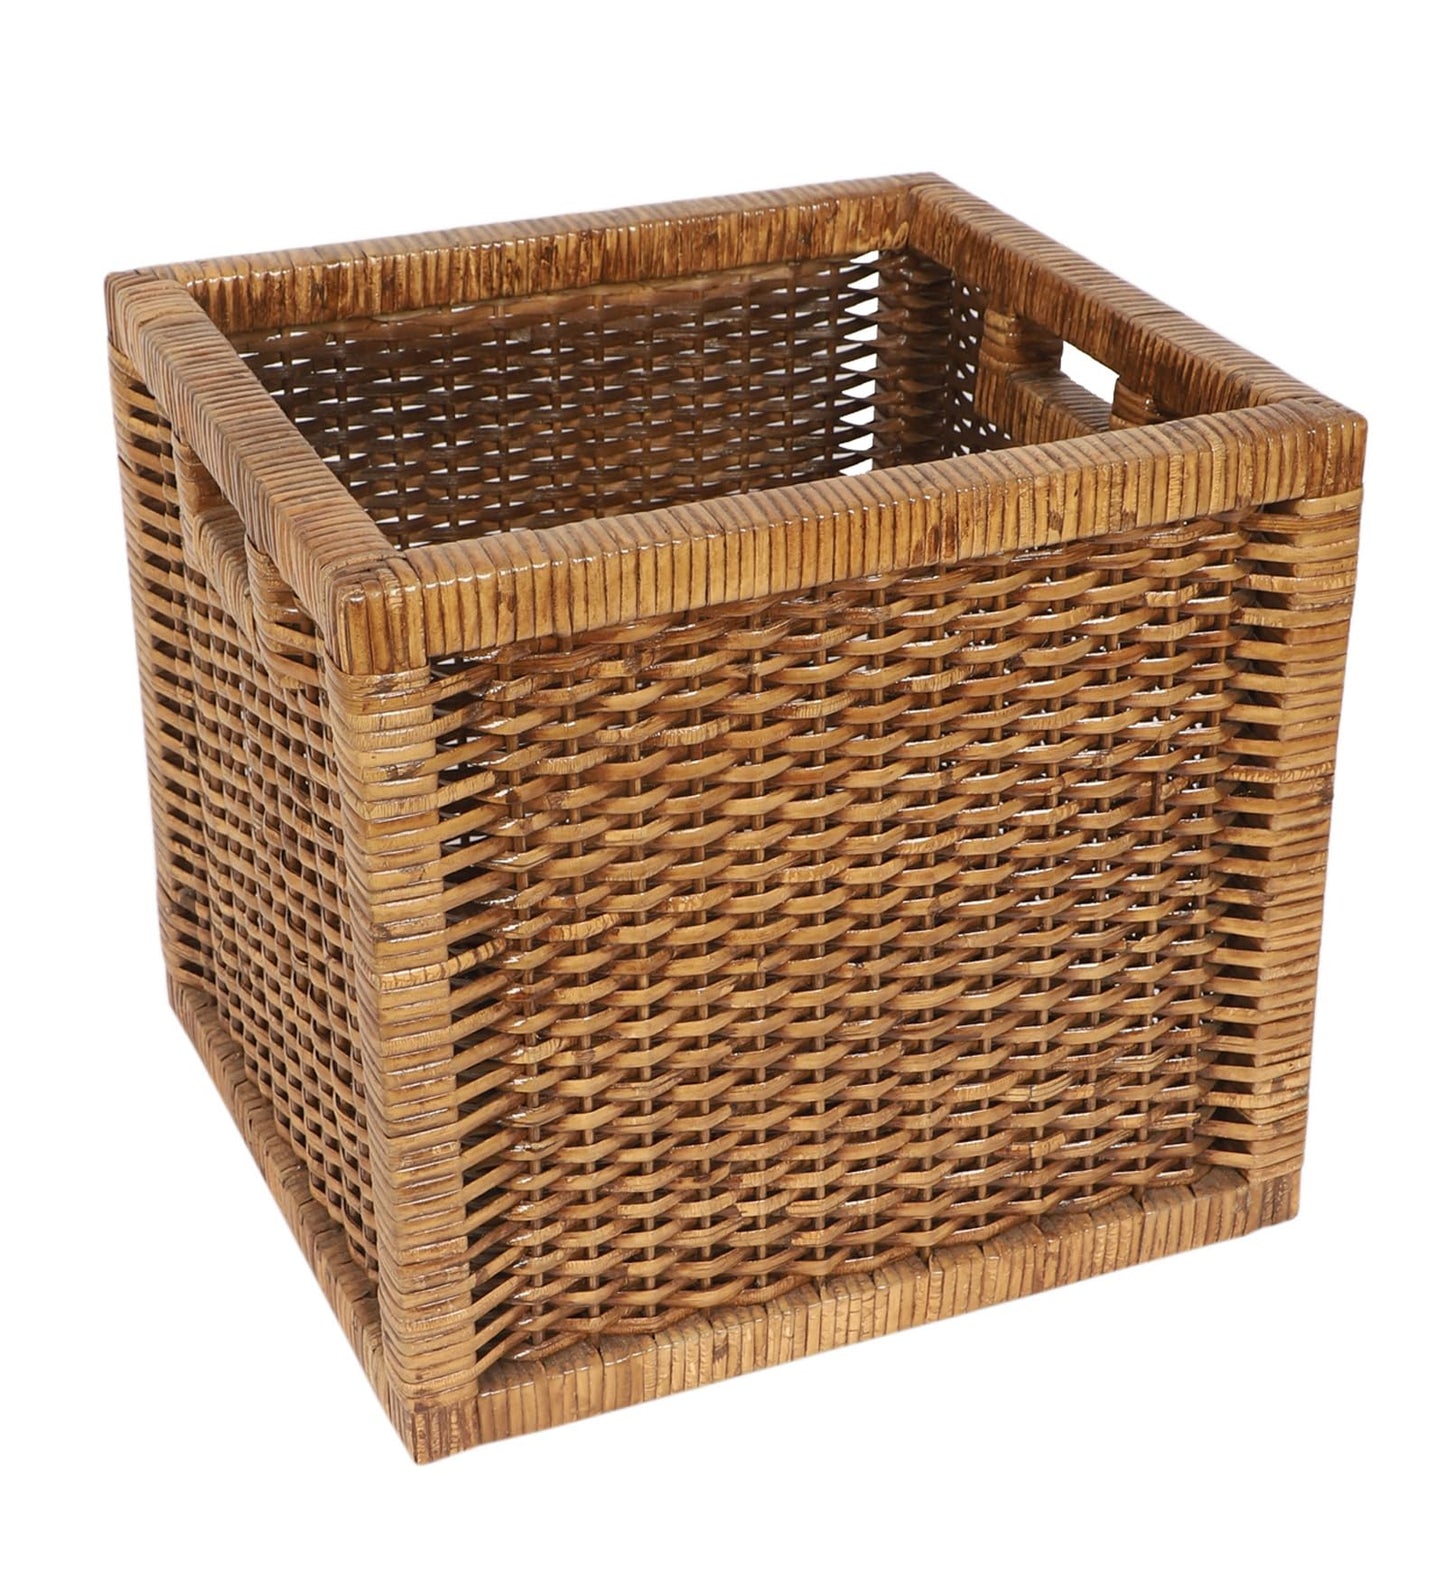 AKWAY Wicker wardrobe basket for storage, cloths, newspapers, photos, toys, plants or other memorabilia, 12.5 x 13.5 x 12.5 Inch, Beige (12.5W x 13.5L x 12.5H, Brown)- Akway